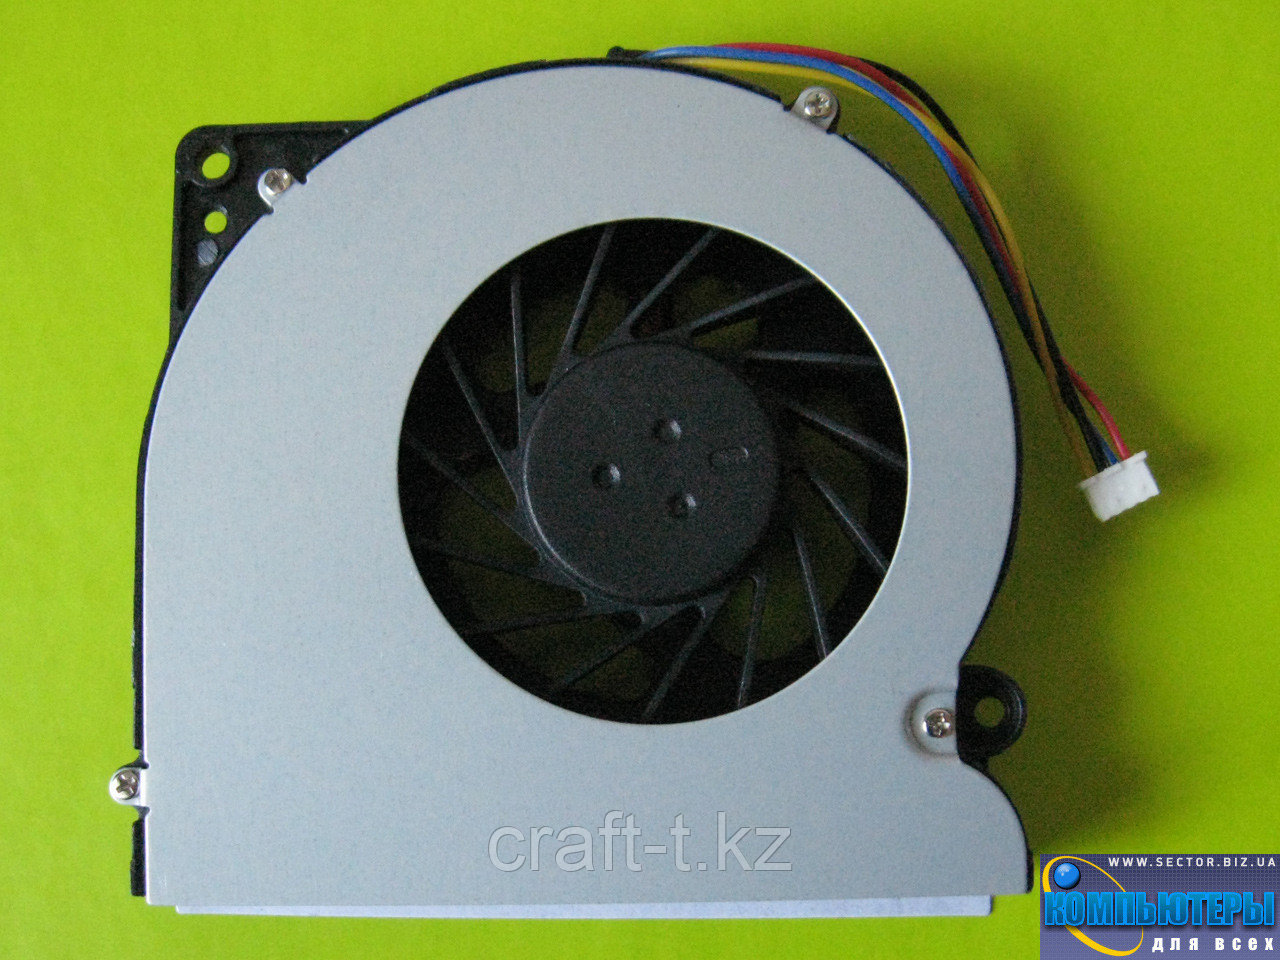 Система охлаждения (Fan), для ноутбука  ASUS N61/K52